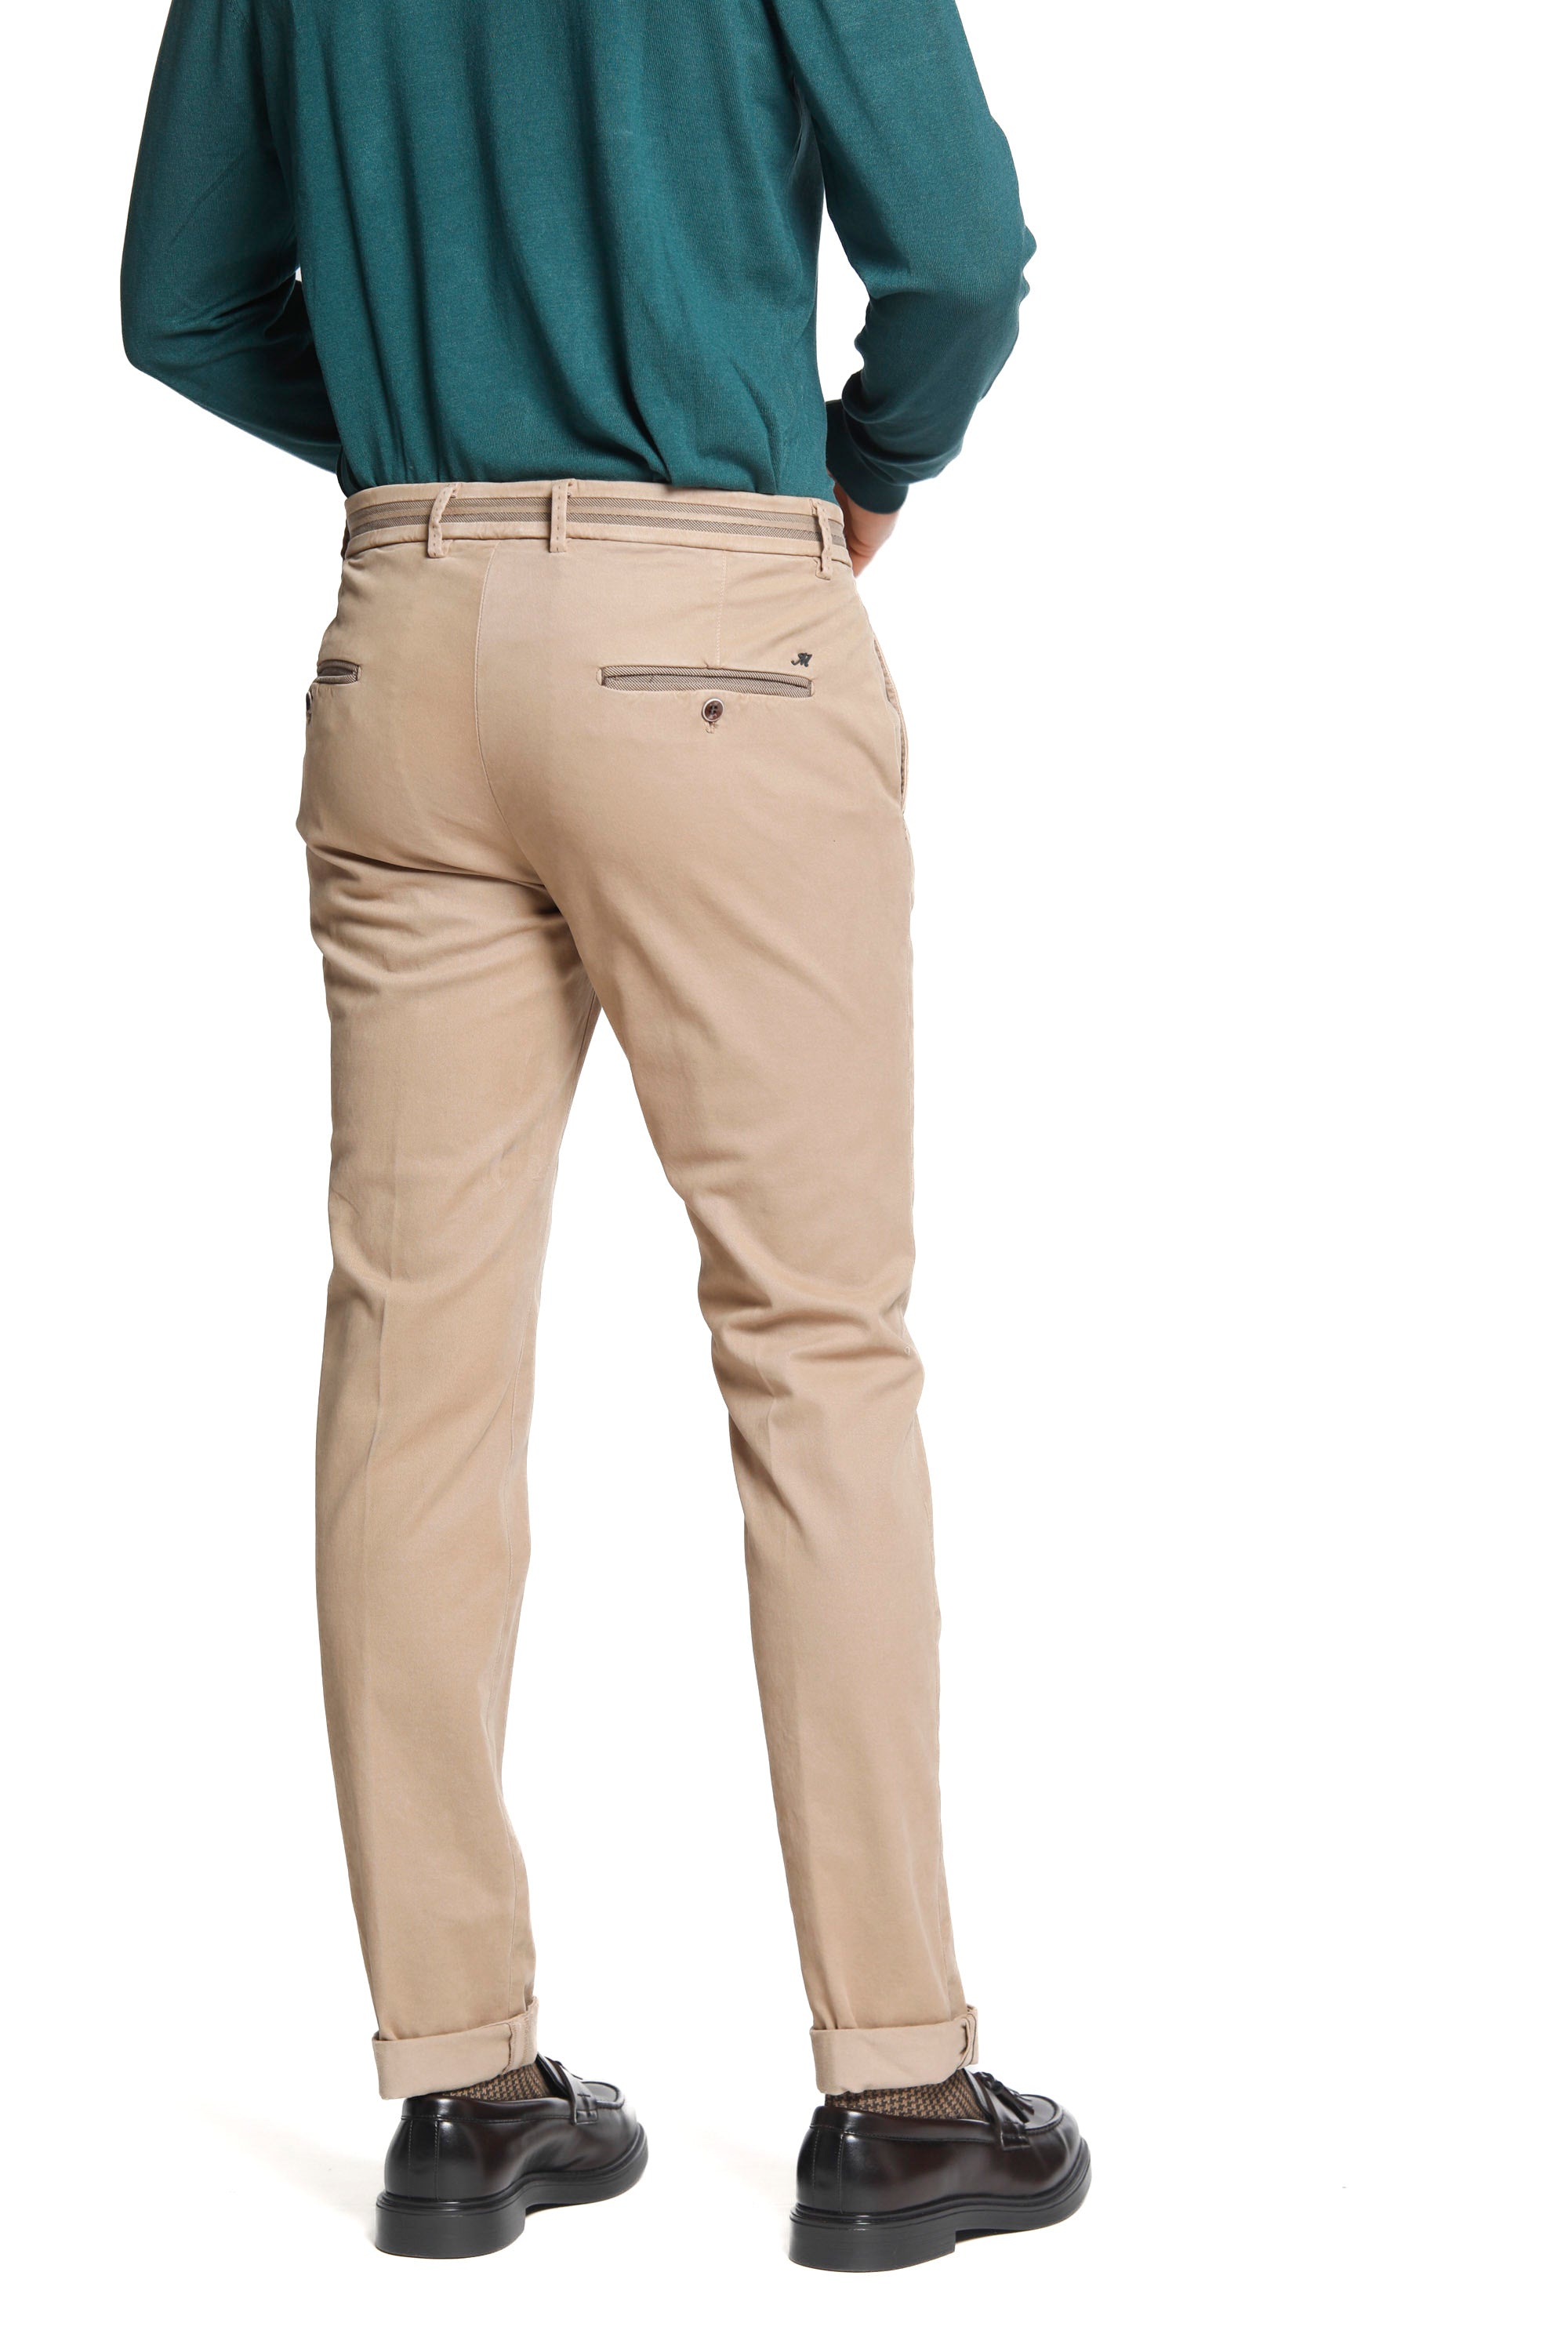 Torino Tapes pantalon chino homme en gabardine et coton modal stretch coupe slim